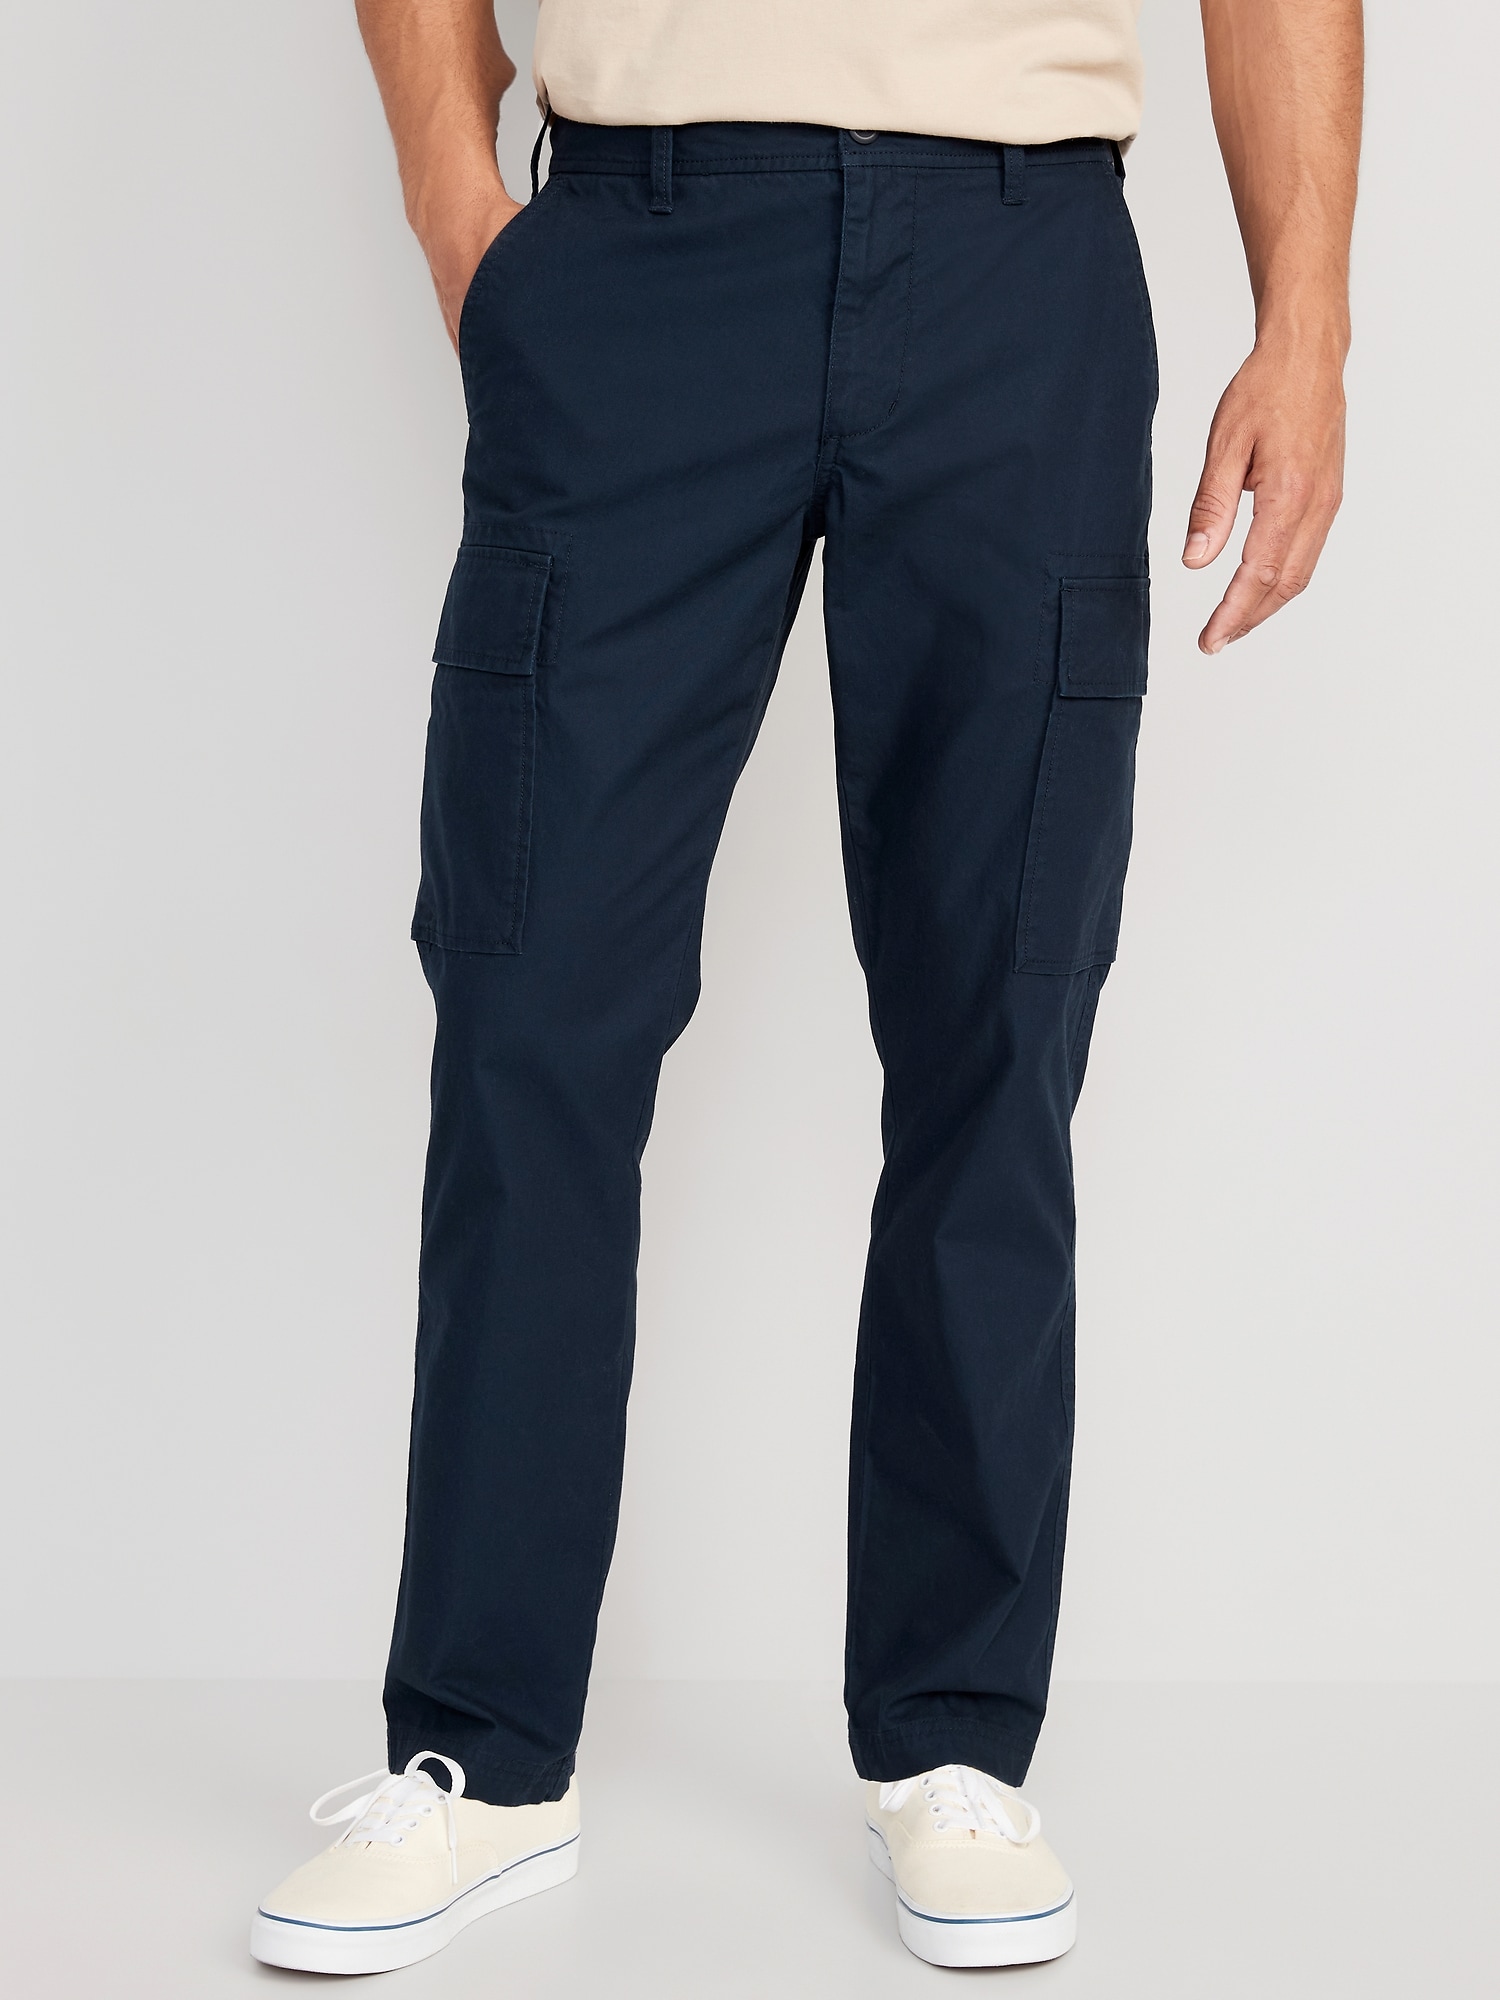 FR Cargo Pants | 46-60 Waist | 9oz. 100% Cotton | Navy – www.lapco.com